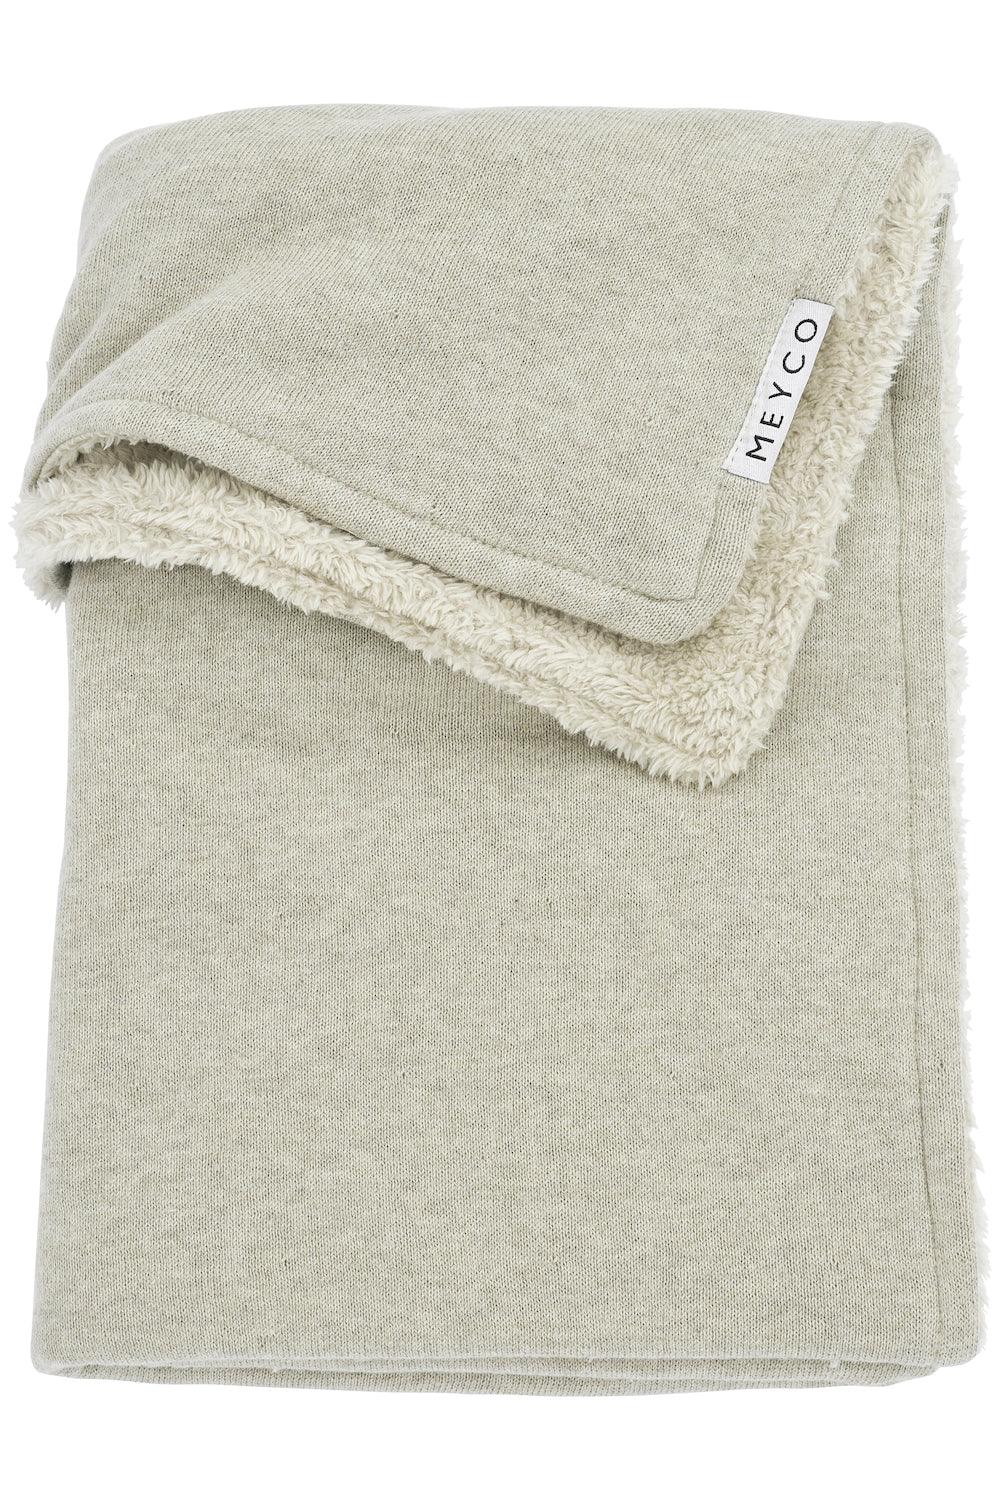 Cot Blanket Velvet Knots Teddy - Sand Melange 100x150cm - Mari Kali Stores Cyprus